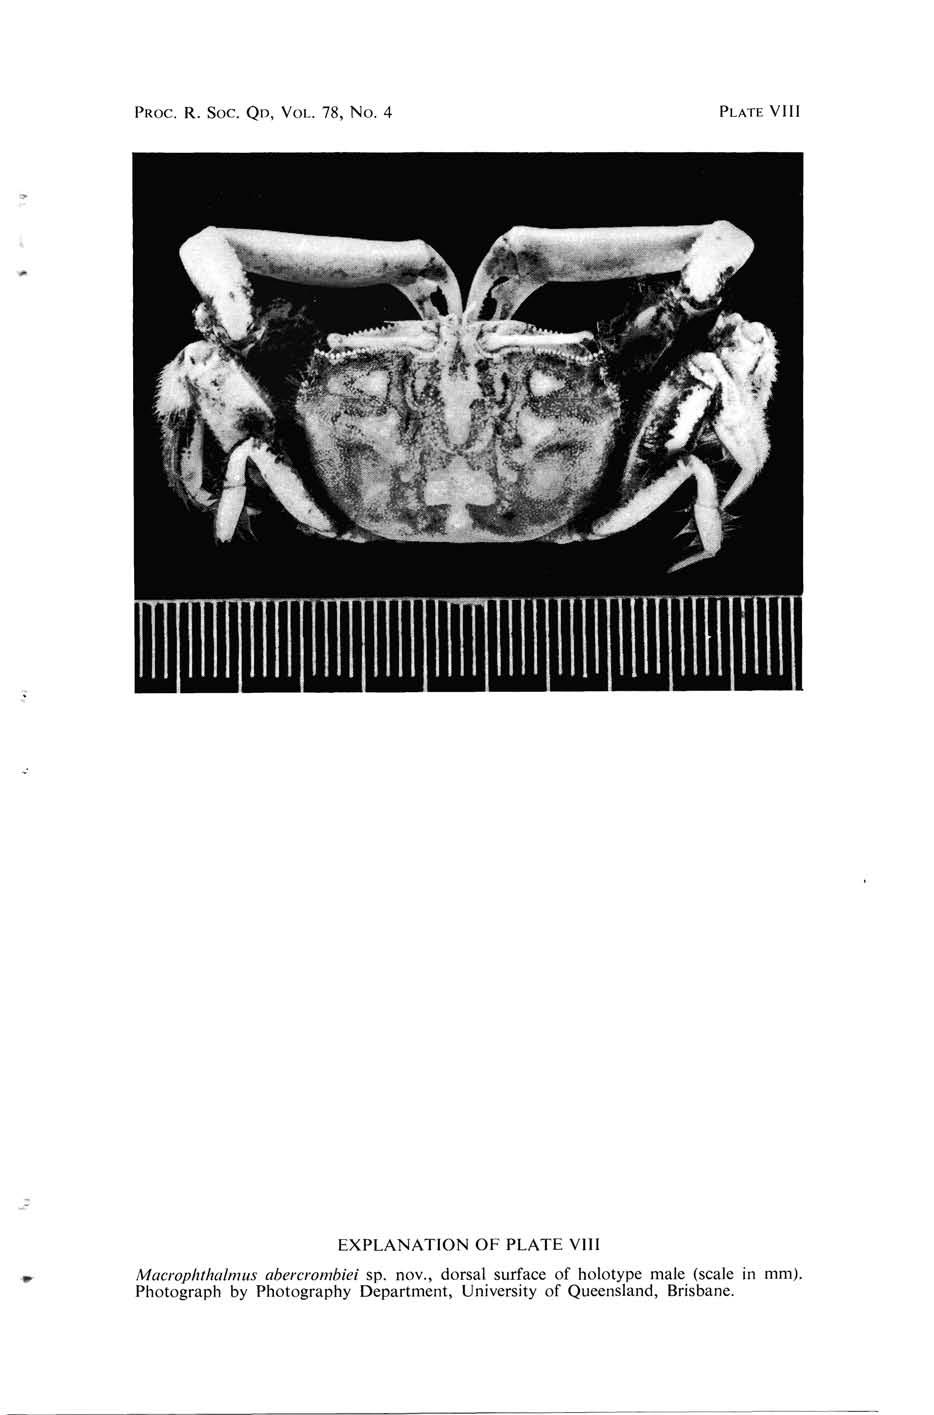 PROC. R. SOC. QD, VOL. 78, No. 4 PLATE VIII EXPLANATION OF PLATE VIII Macmphthalmus abercrombiei sp. nov.